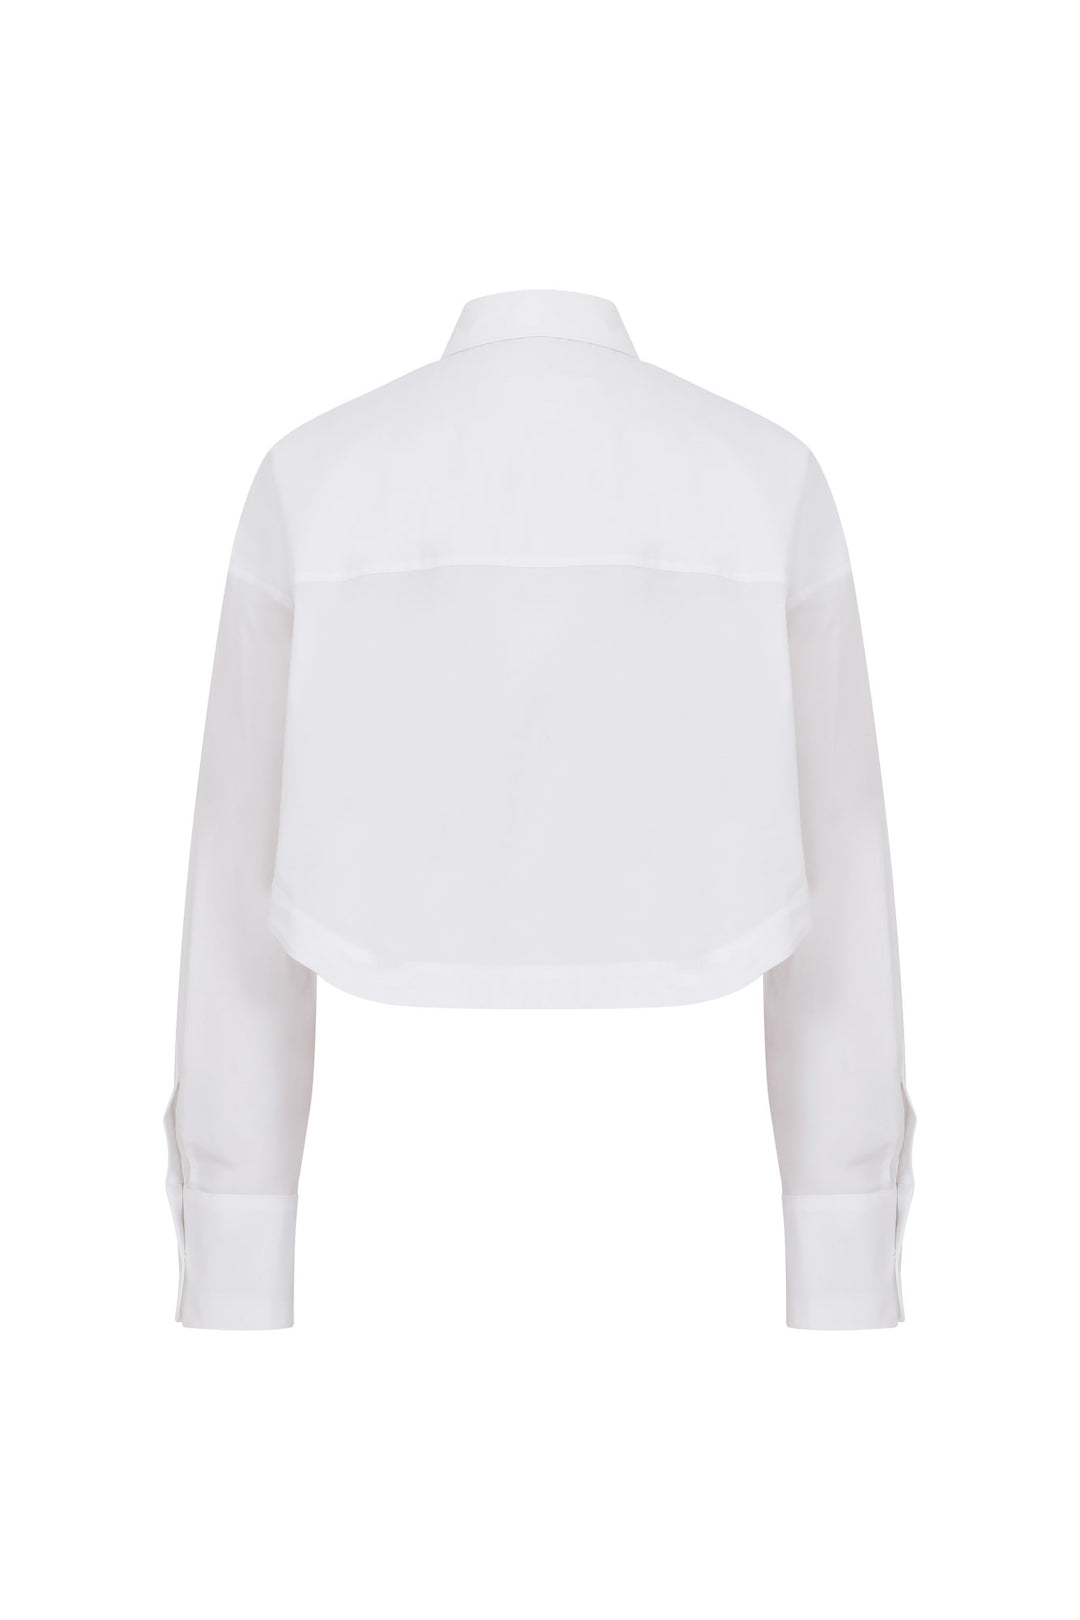 Mercury Cotton-Poplin White Cropped Shirt